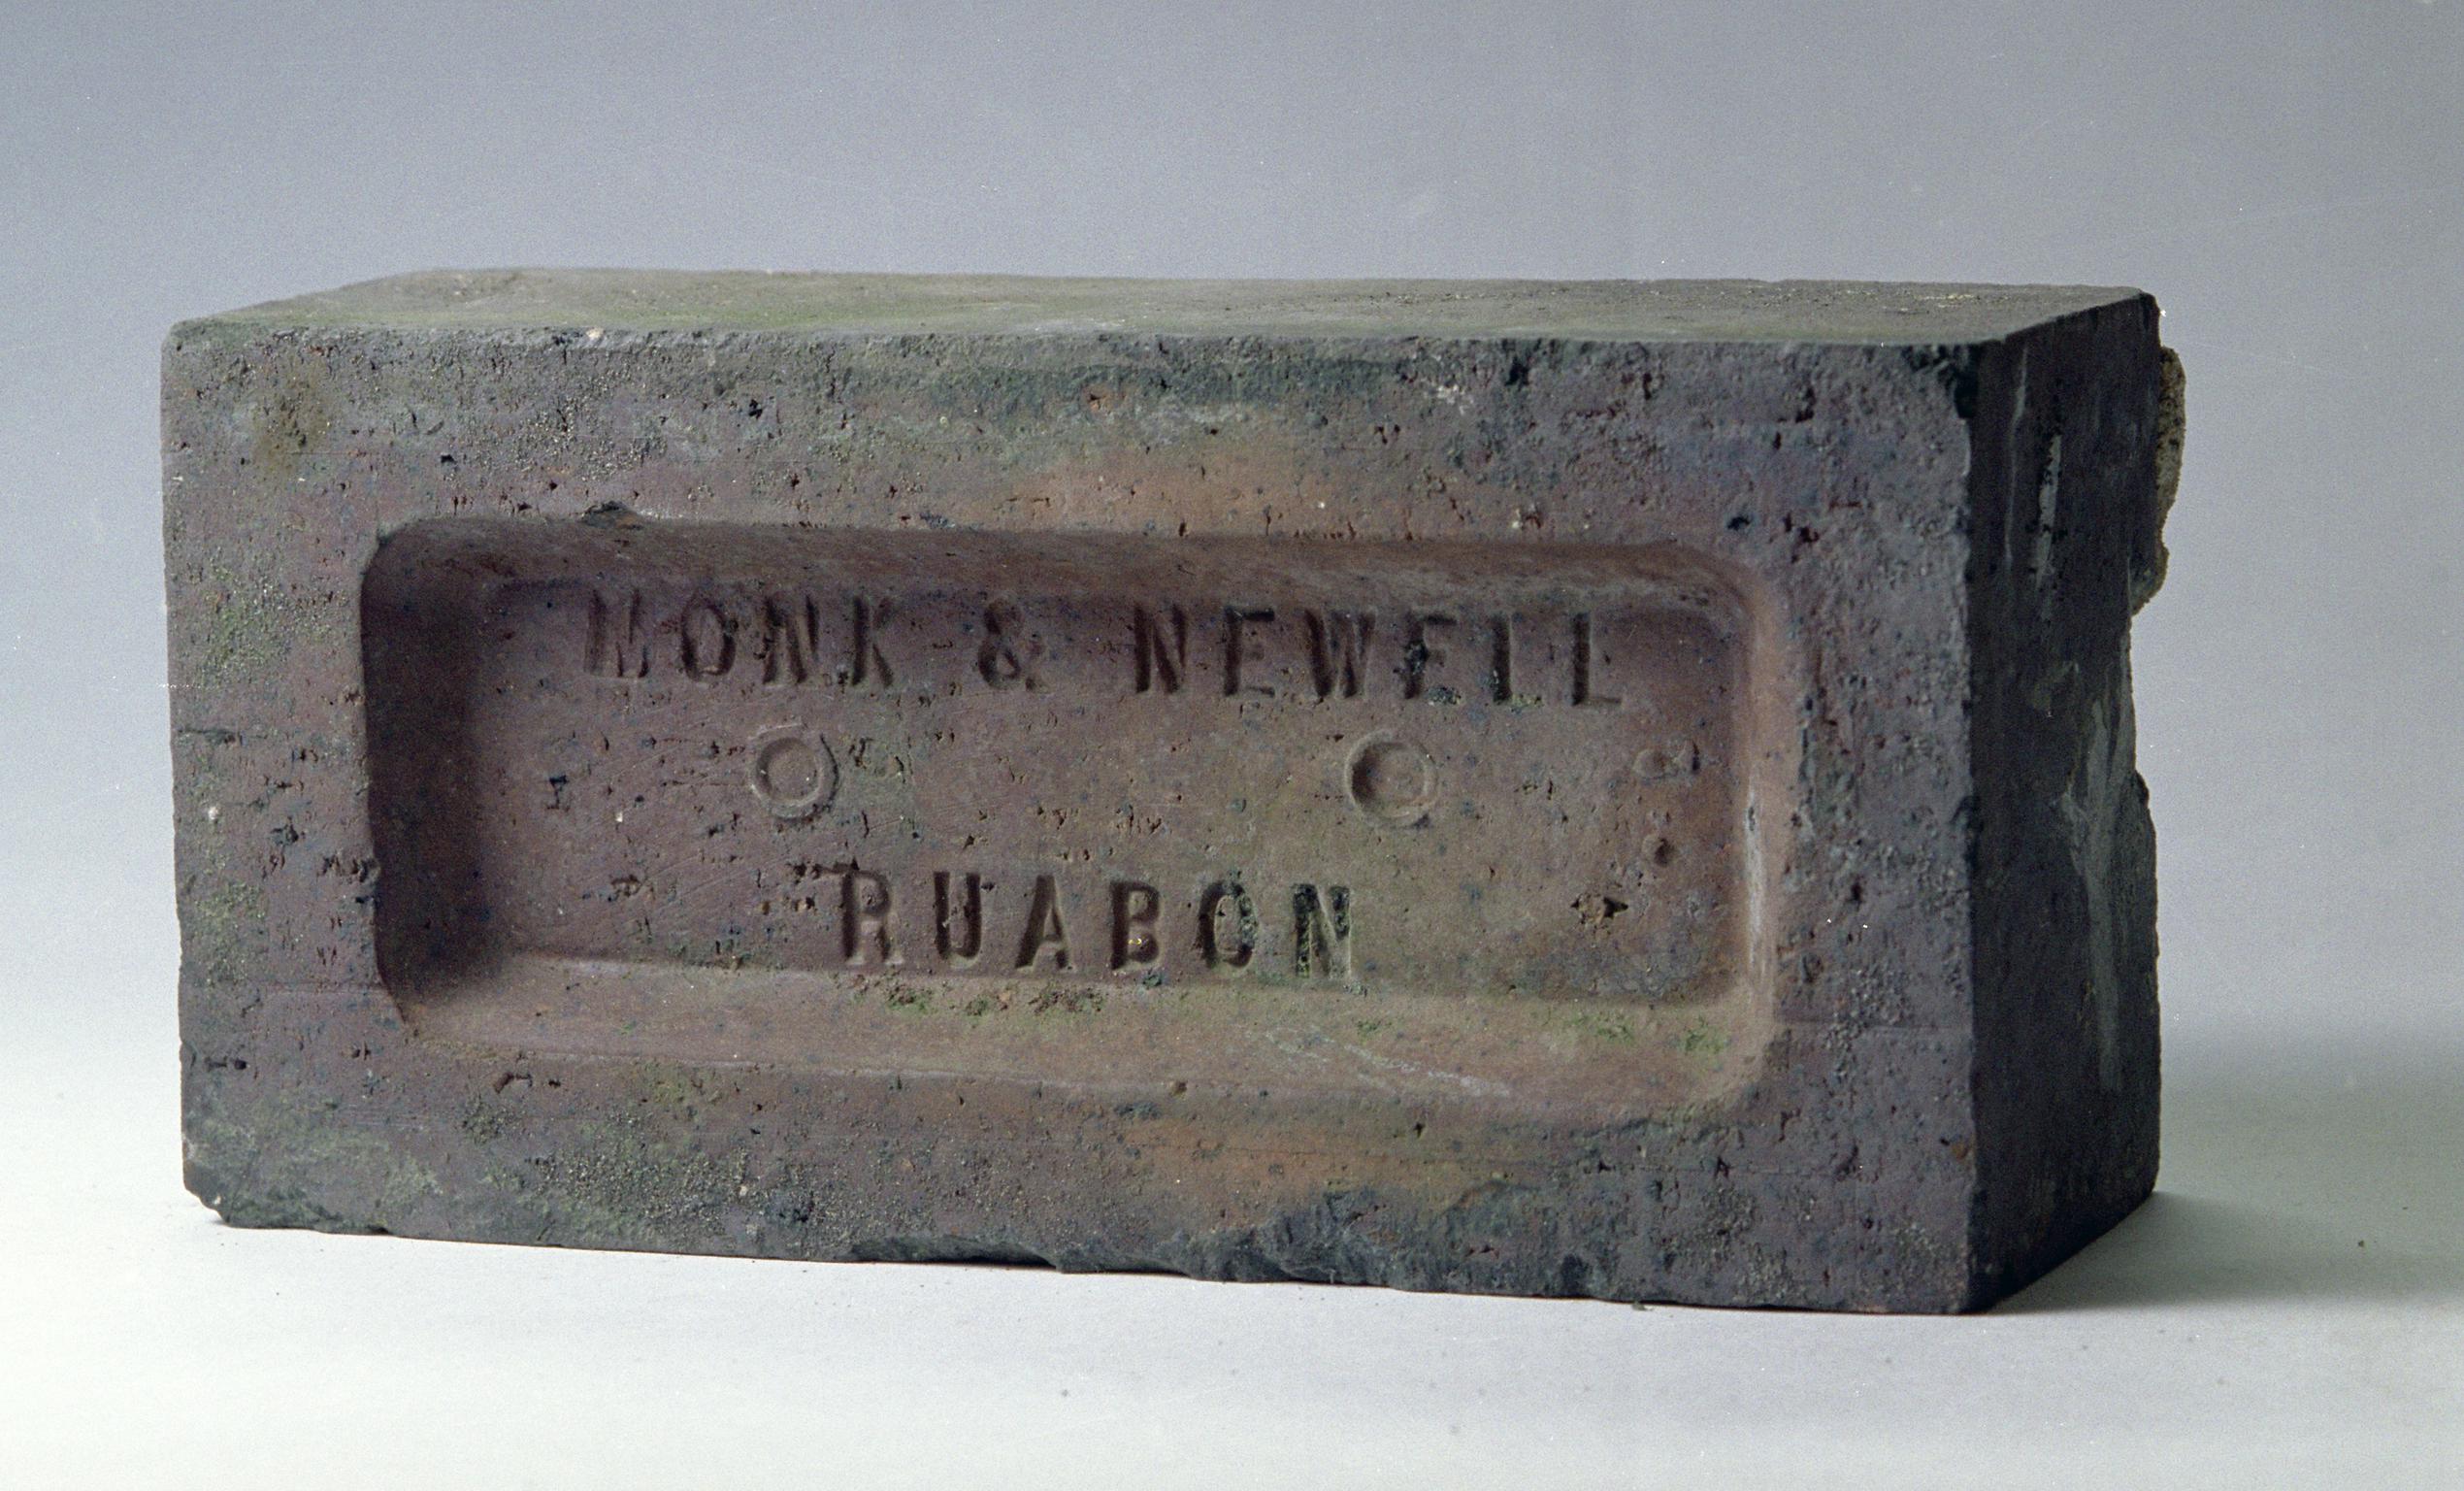 Monk & Newell Ruabon, brick